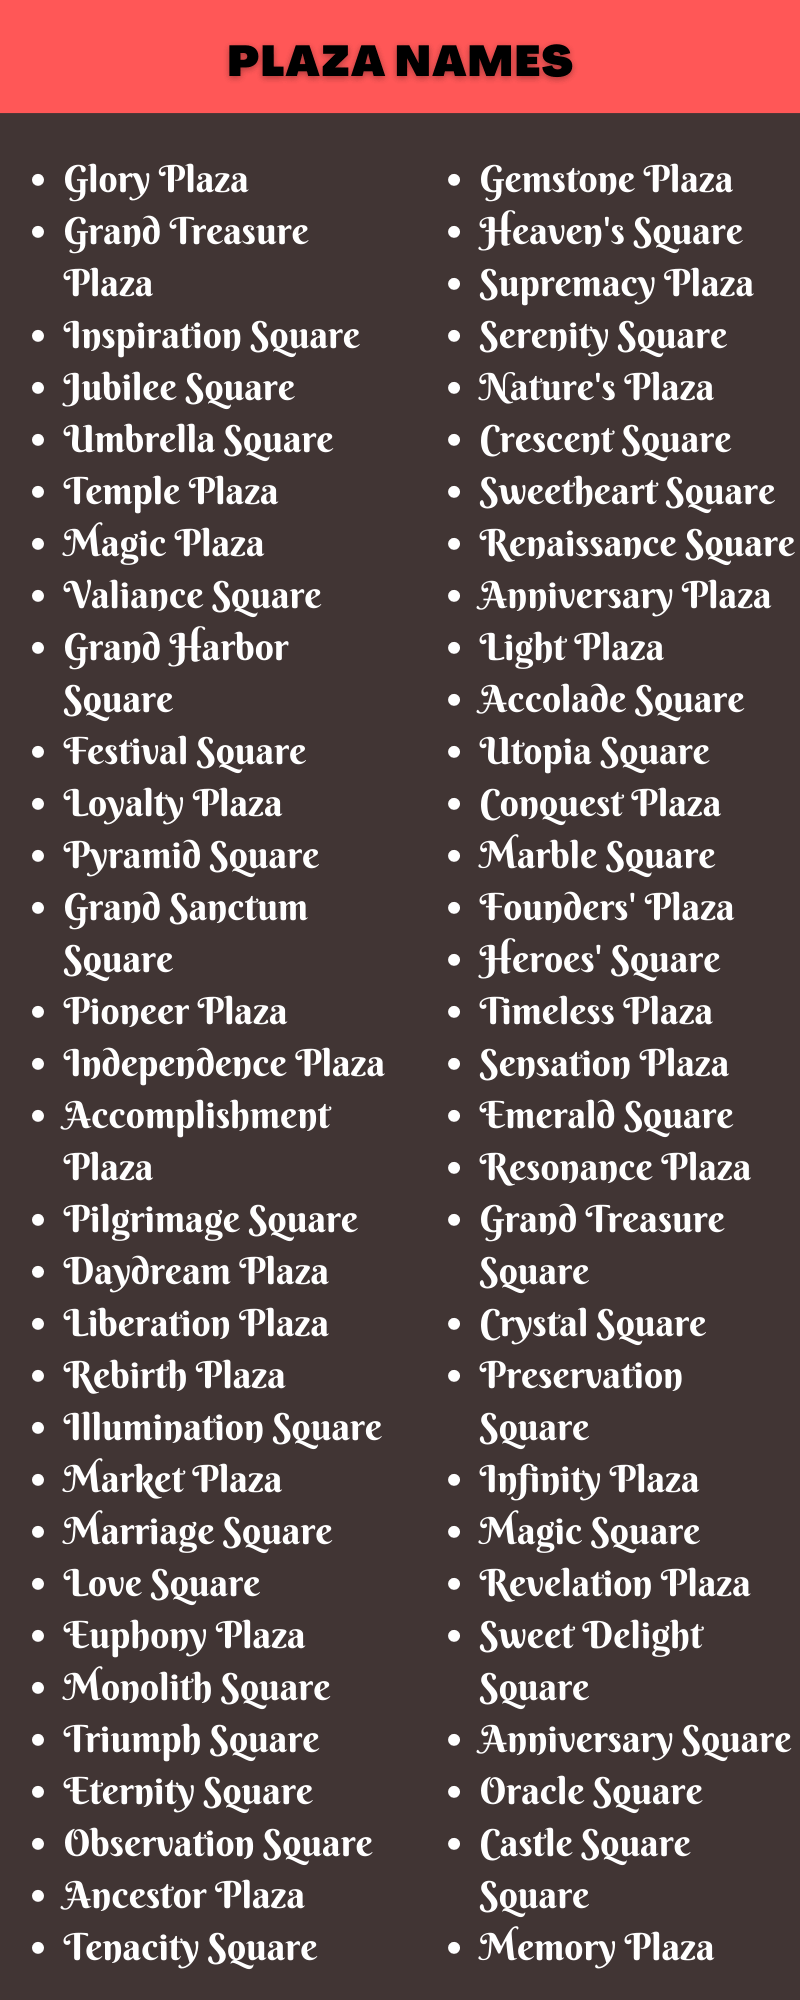 Plaza Names